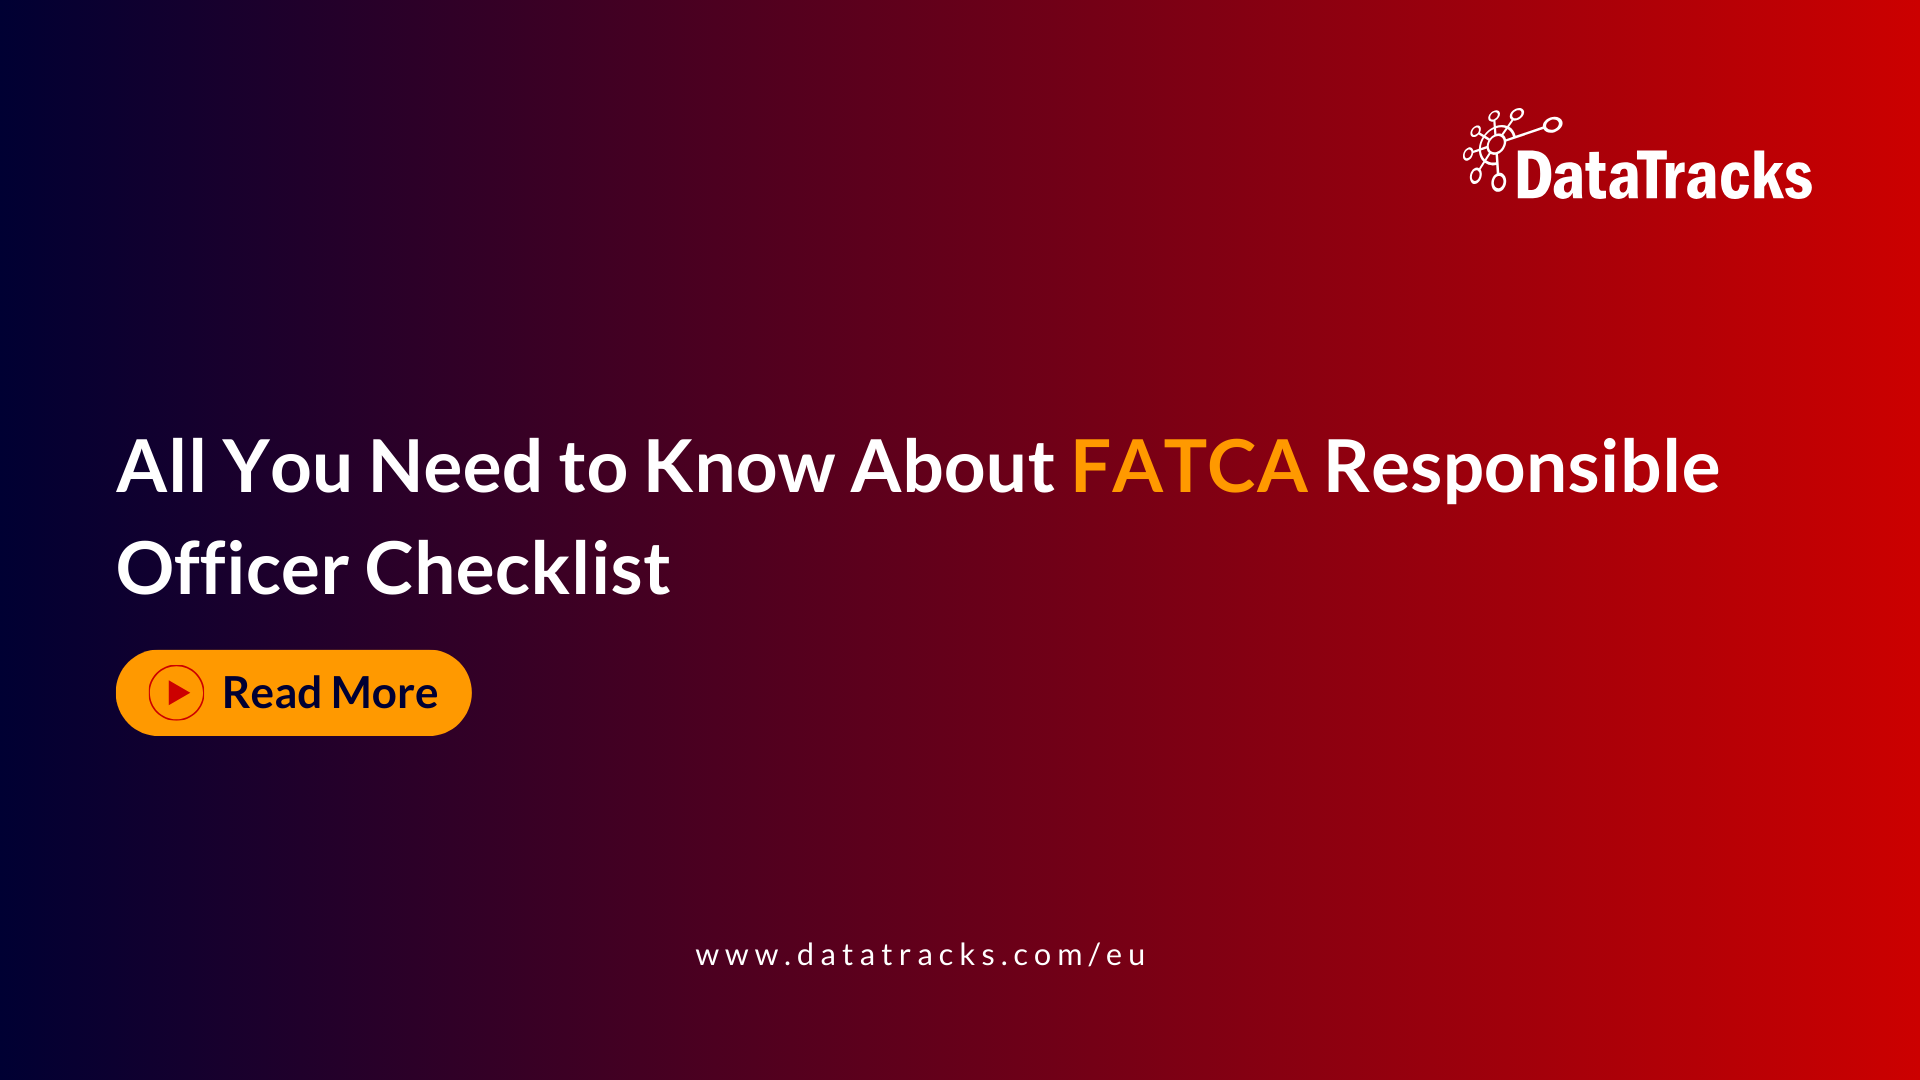 FATCA Responsible Officer Checklist